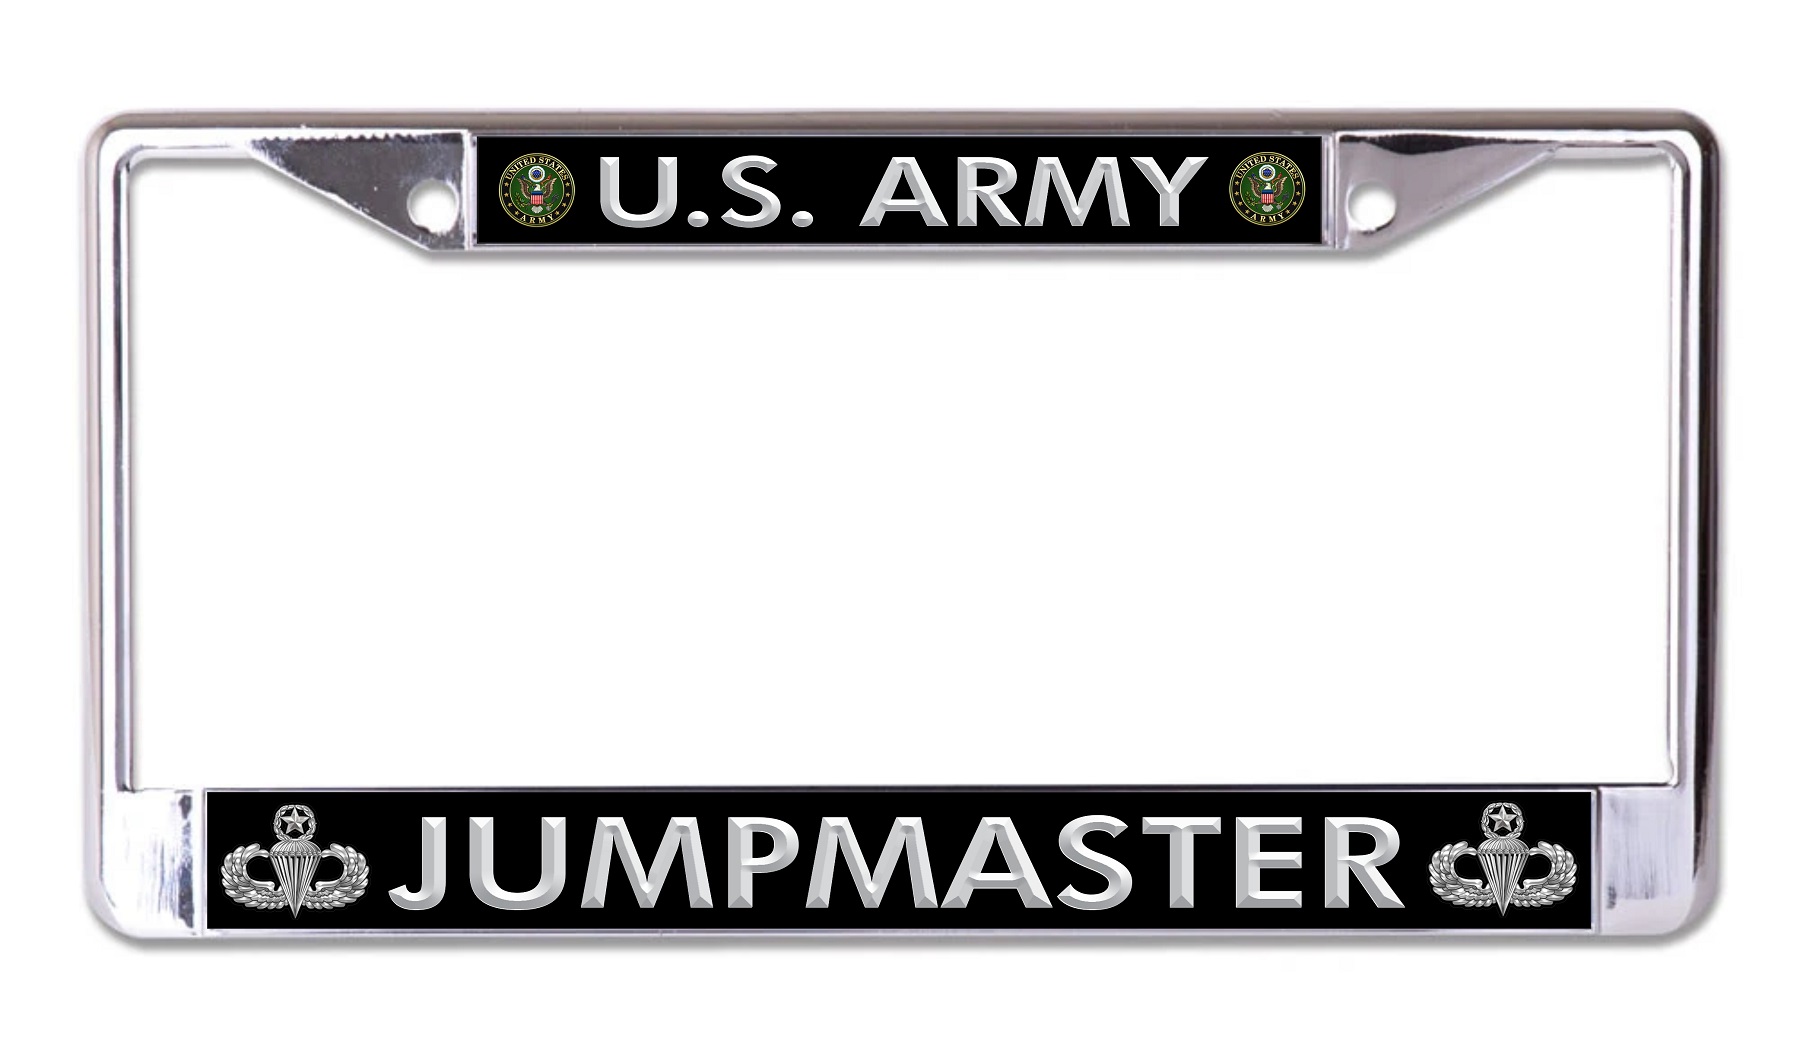 License Plates Online U.S. Army Jumpmaster Chrome License Plate Frame